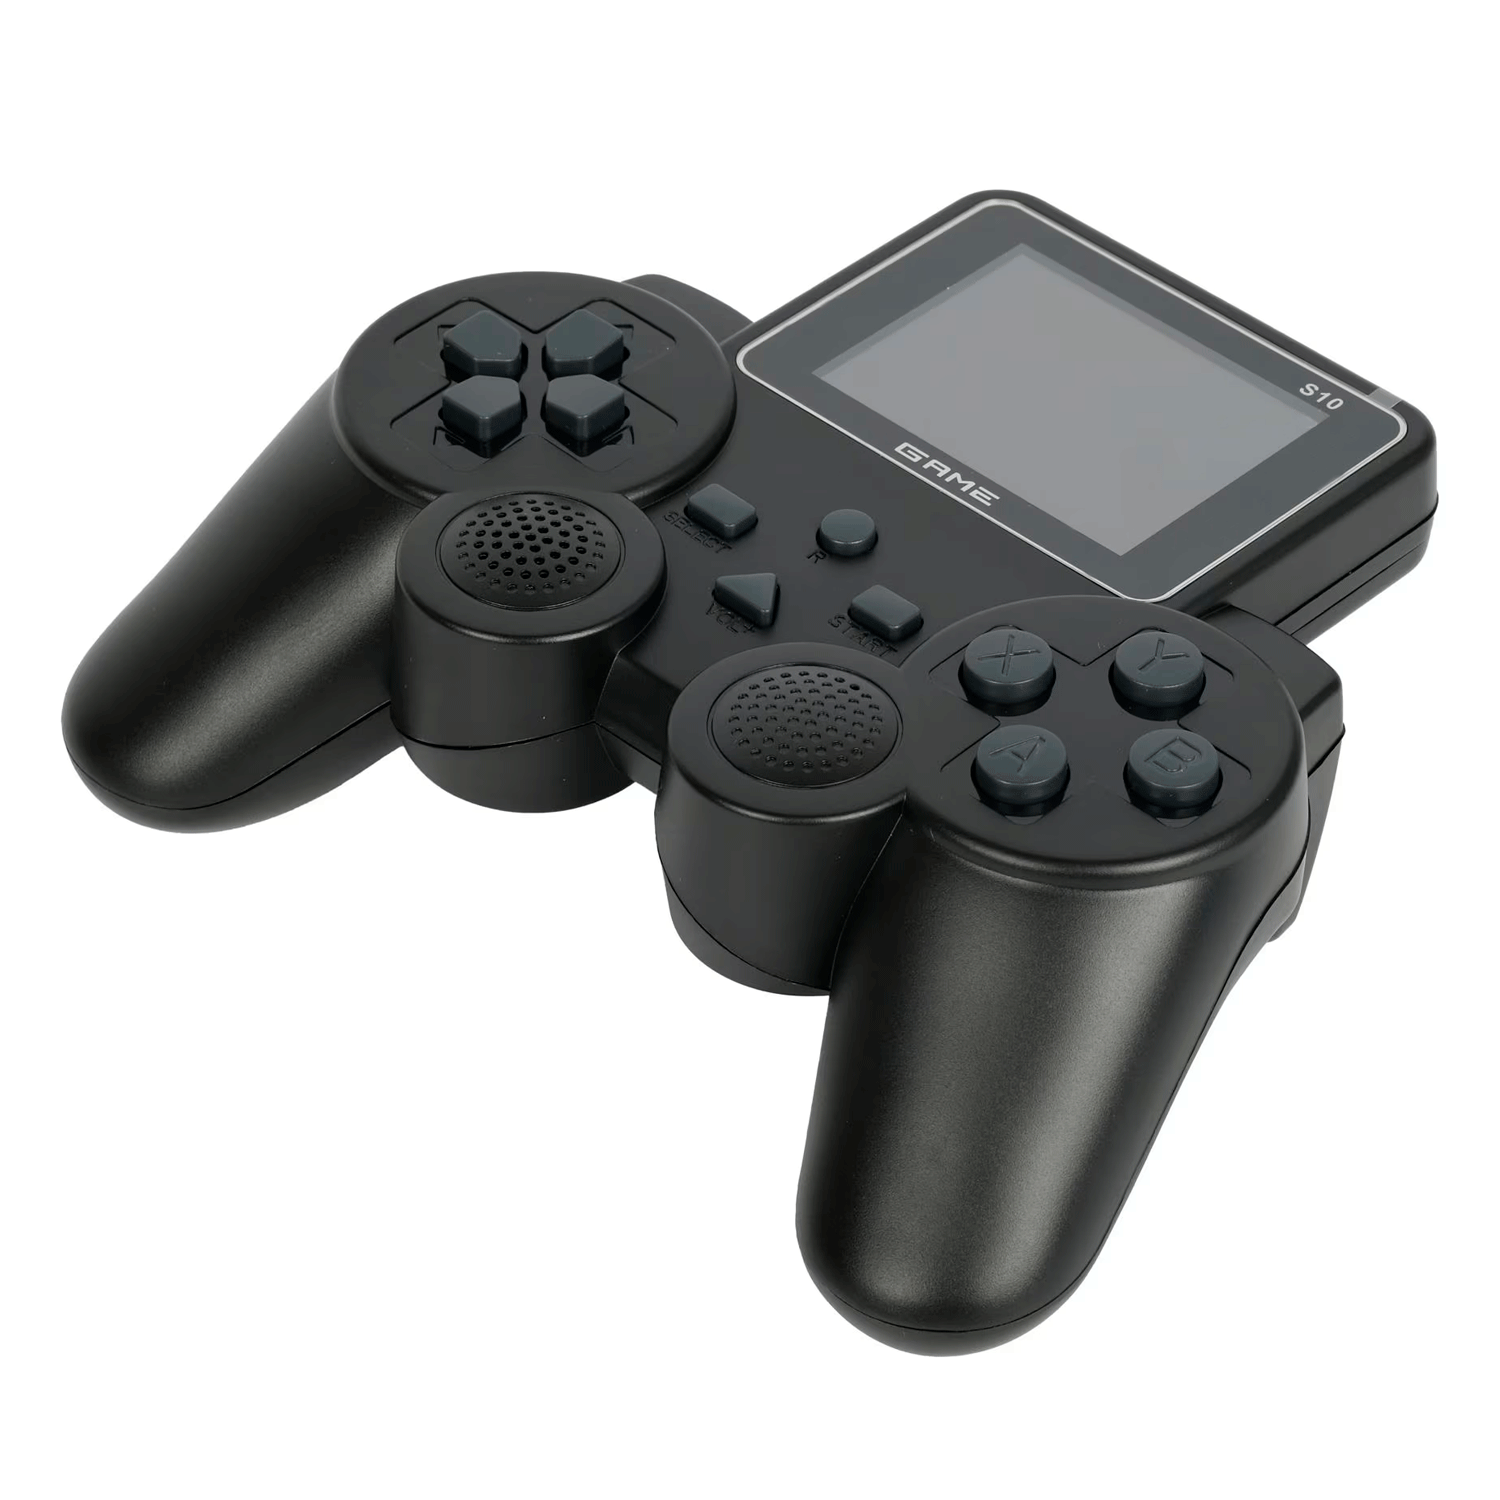 Console Game Stick Controller Gampead Digital Game Luo LU-SY05 Portatil /  520 Jogos / Tela 2.4 / Dual / HD / 1020Mah - Preto